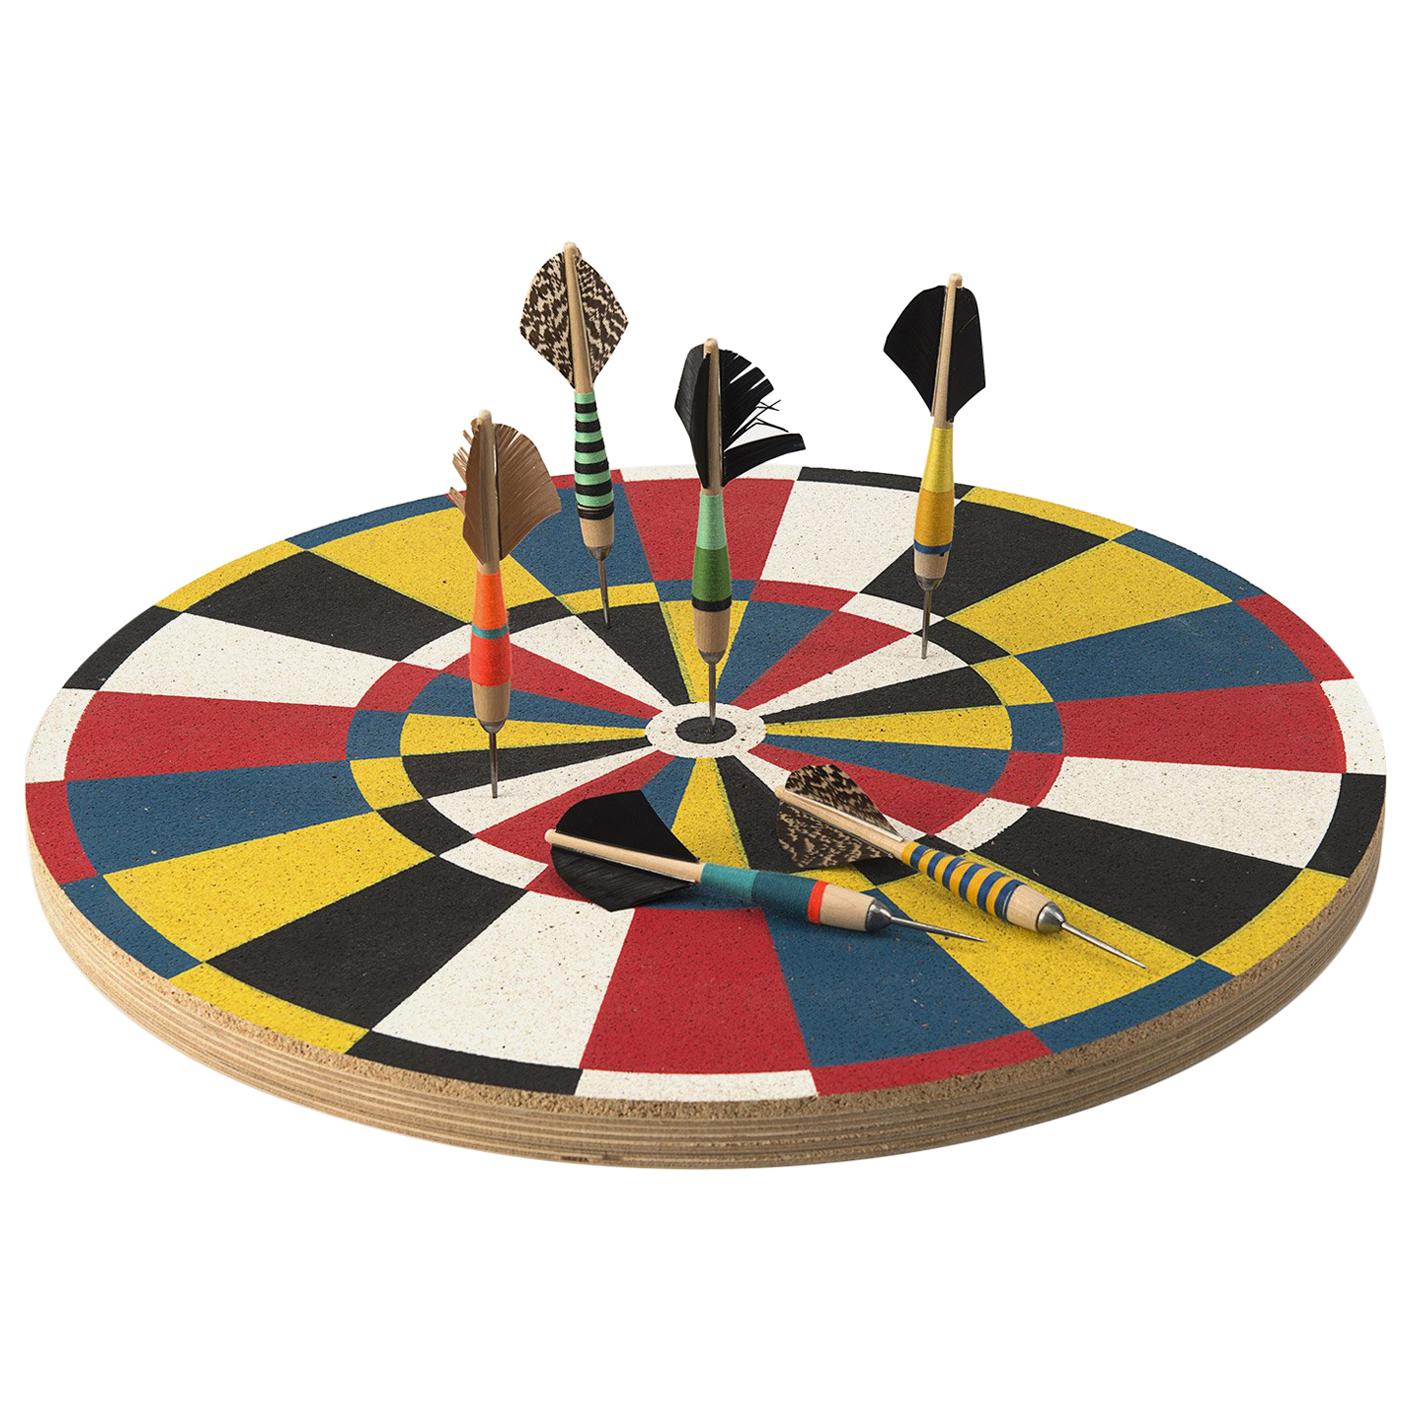 Decorative Dart Board with Three Darts